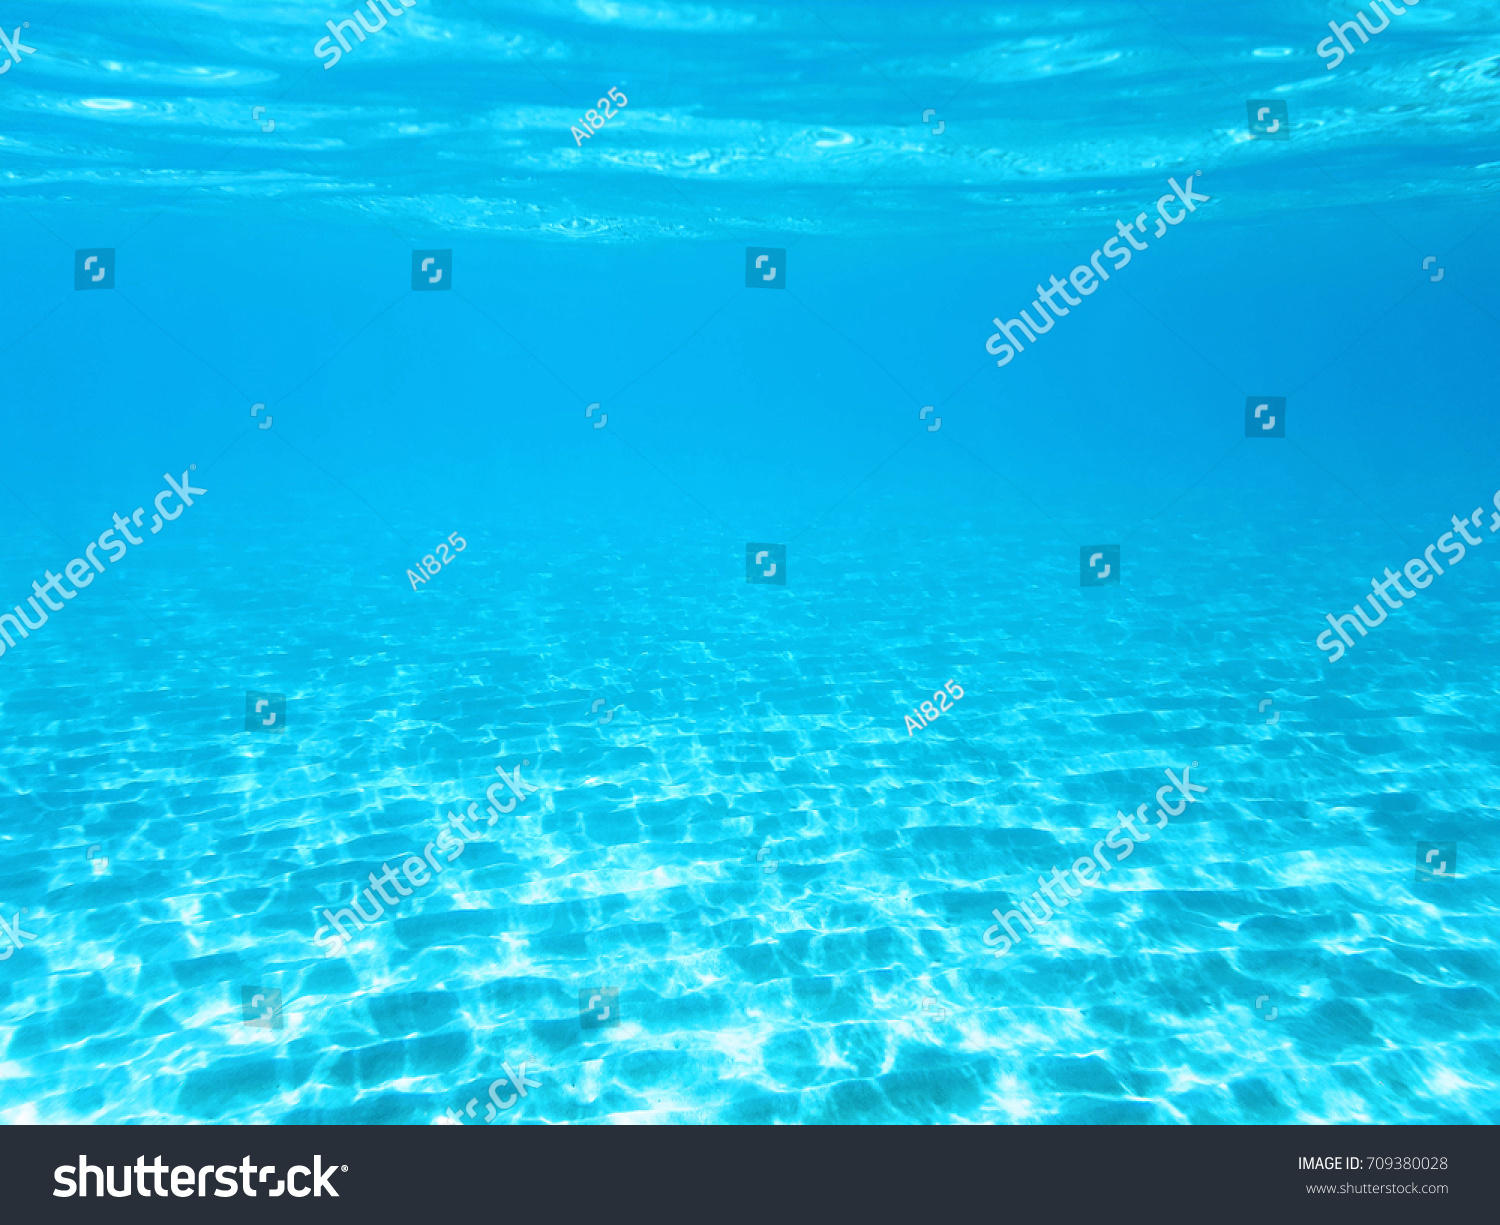 Crystal blue underwater background or wallpaper #709380028